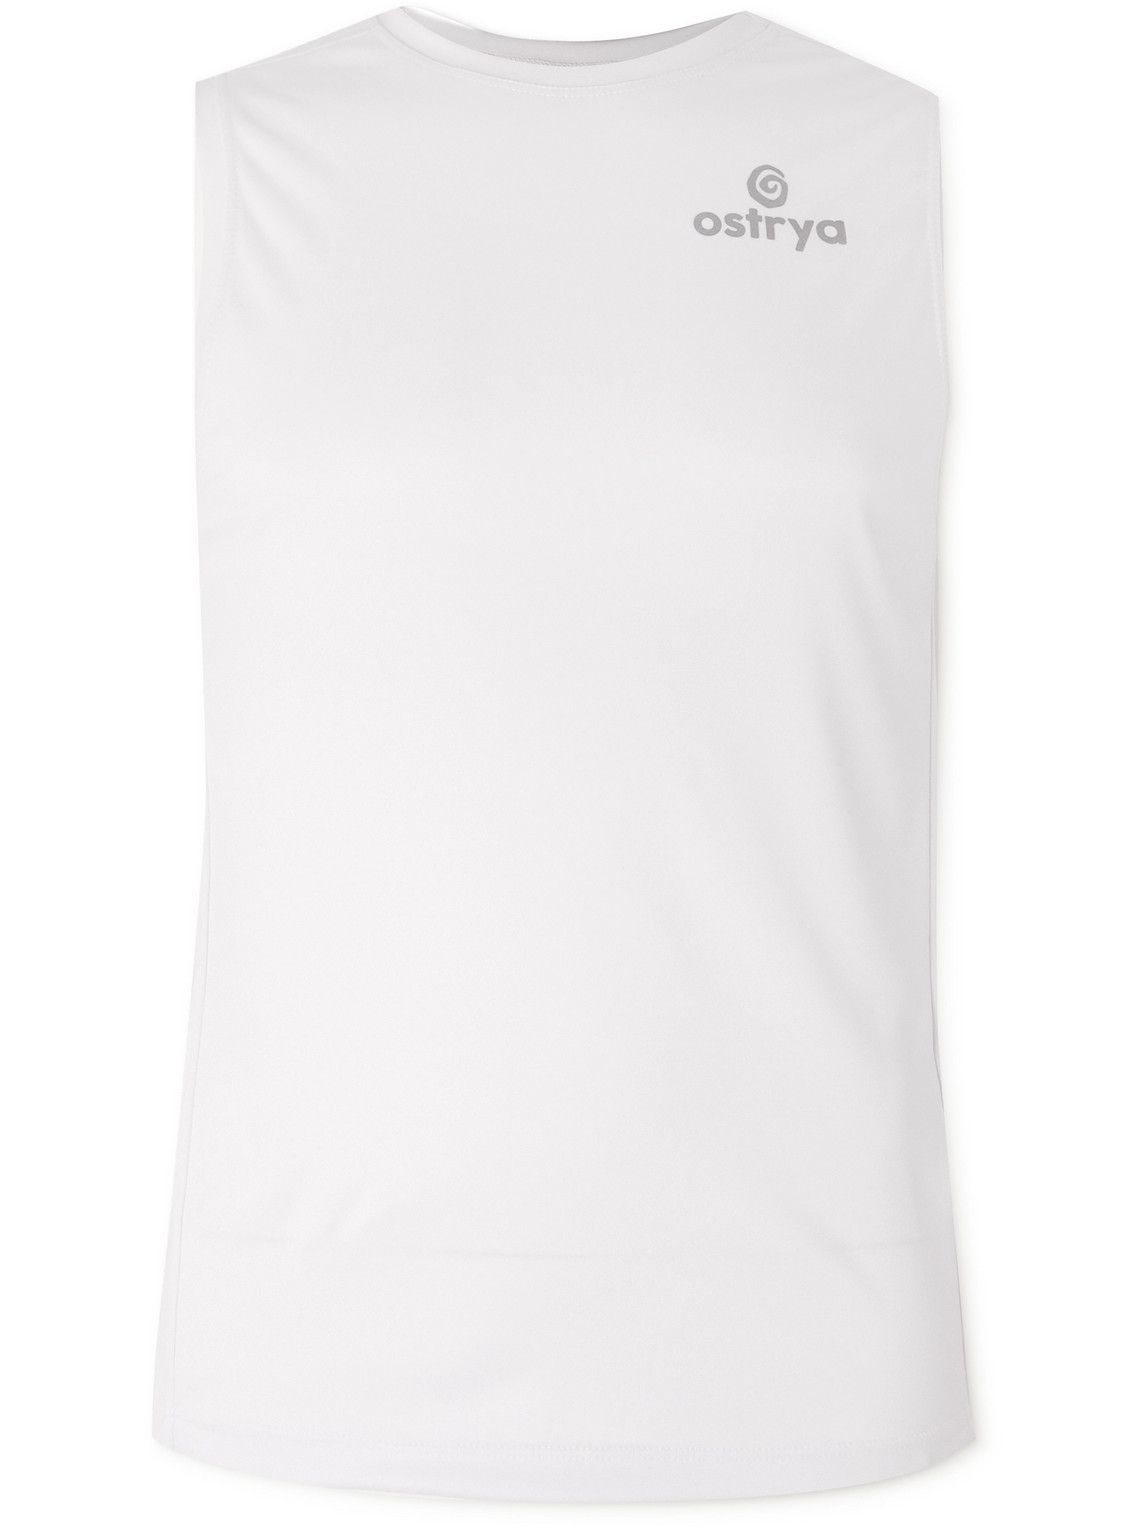 Photo: OSTRYA - Slim-Fit Logo-Print Jersey Tank Top - White